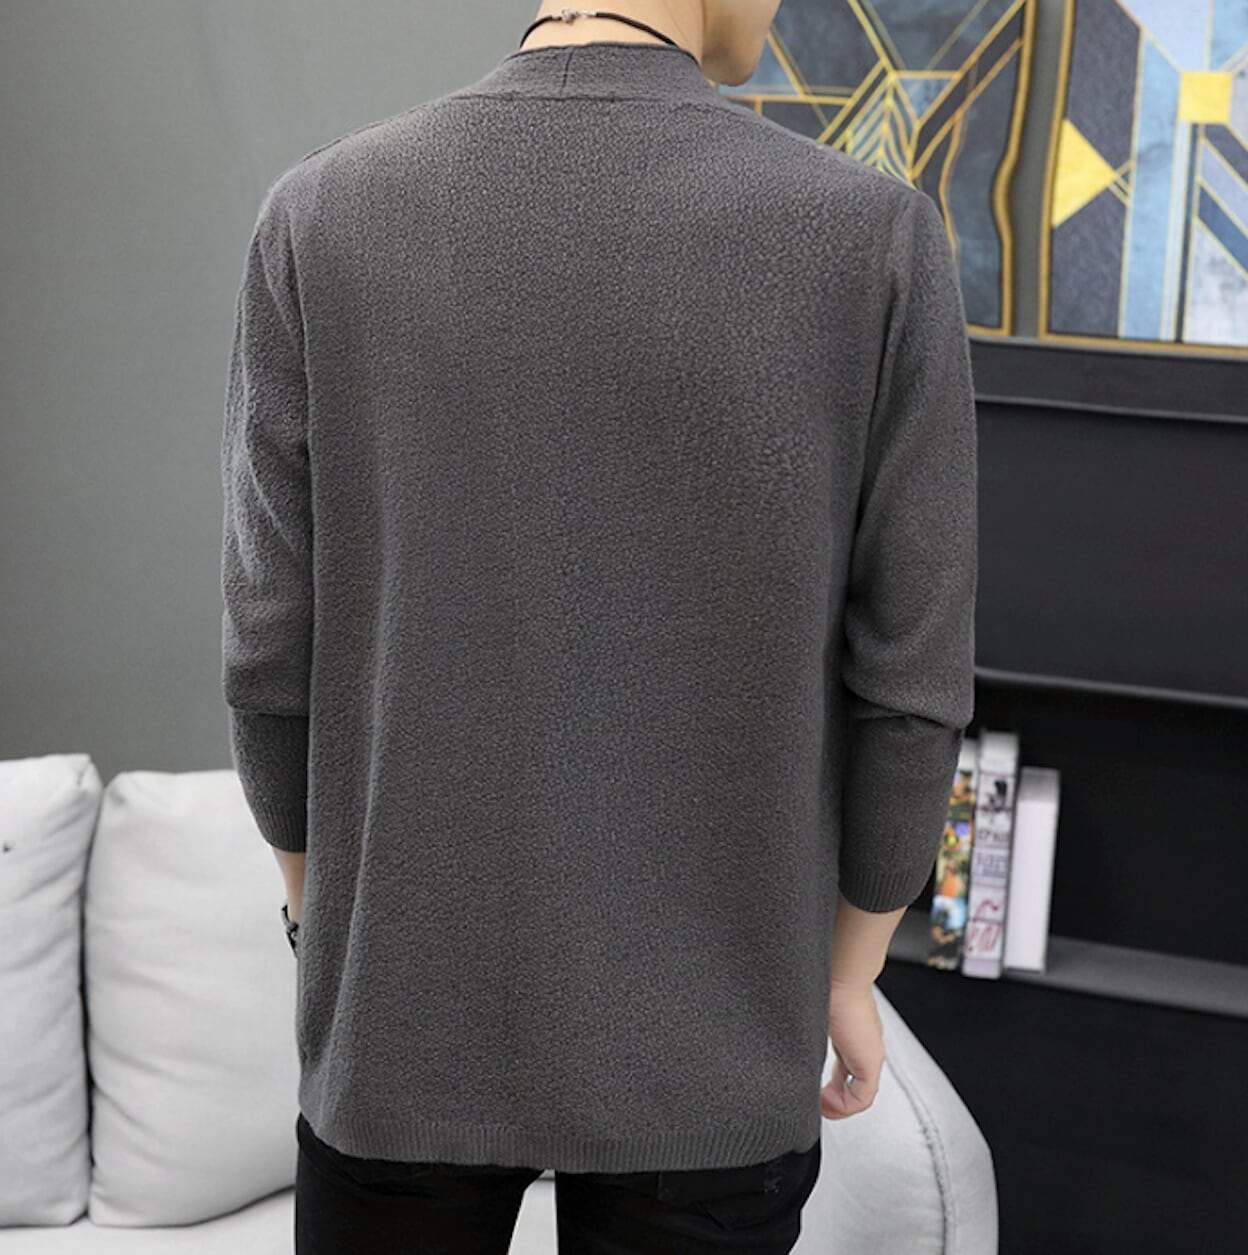 mens gray polyester vegan friendly street style cardigan sweater